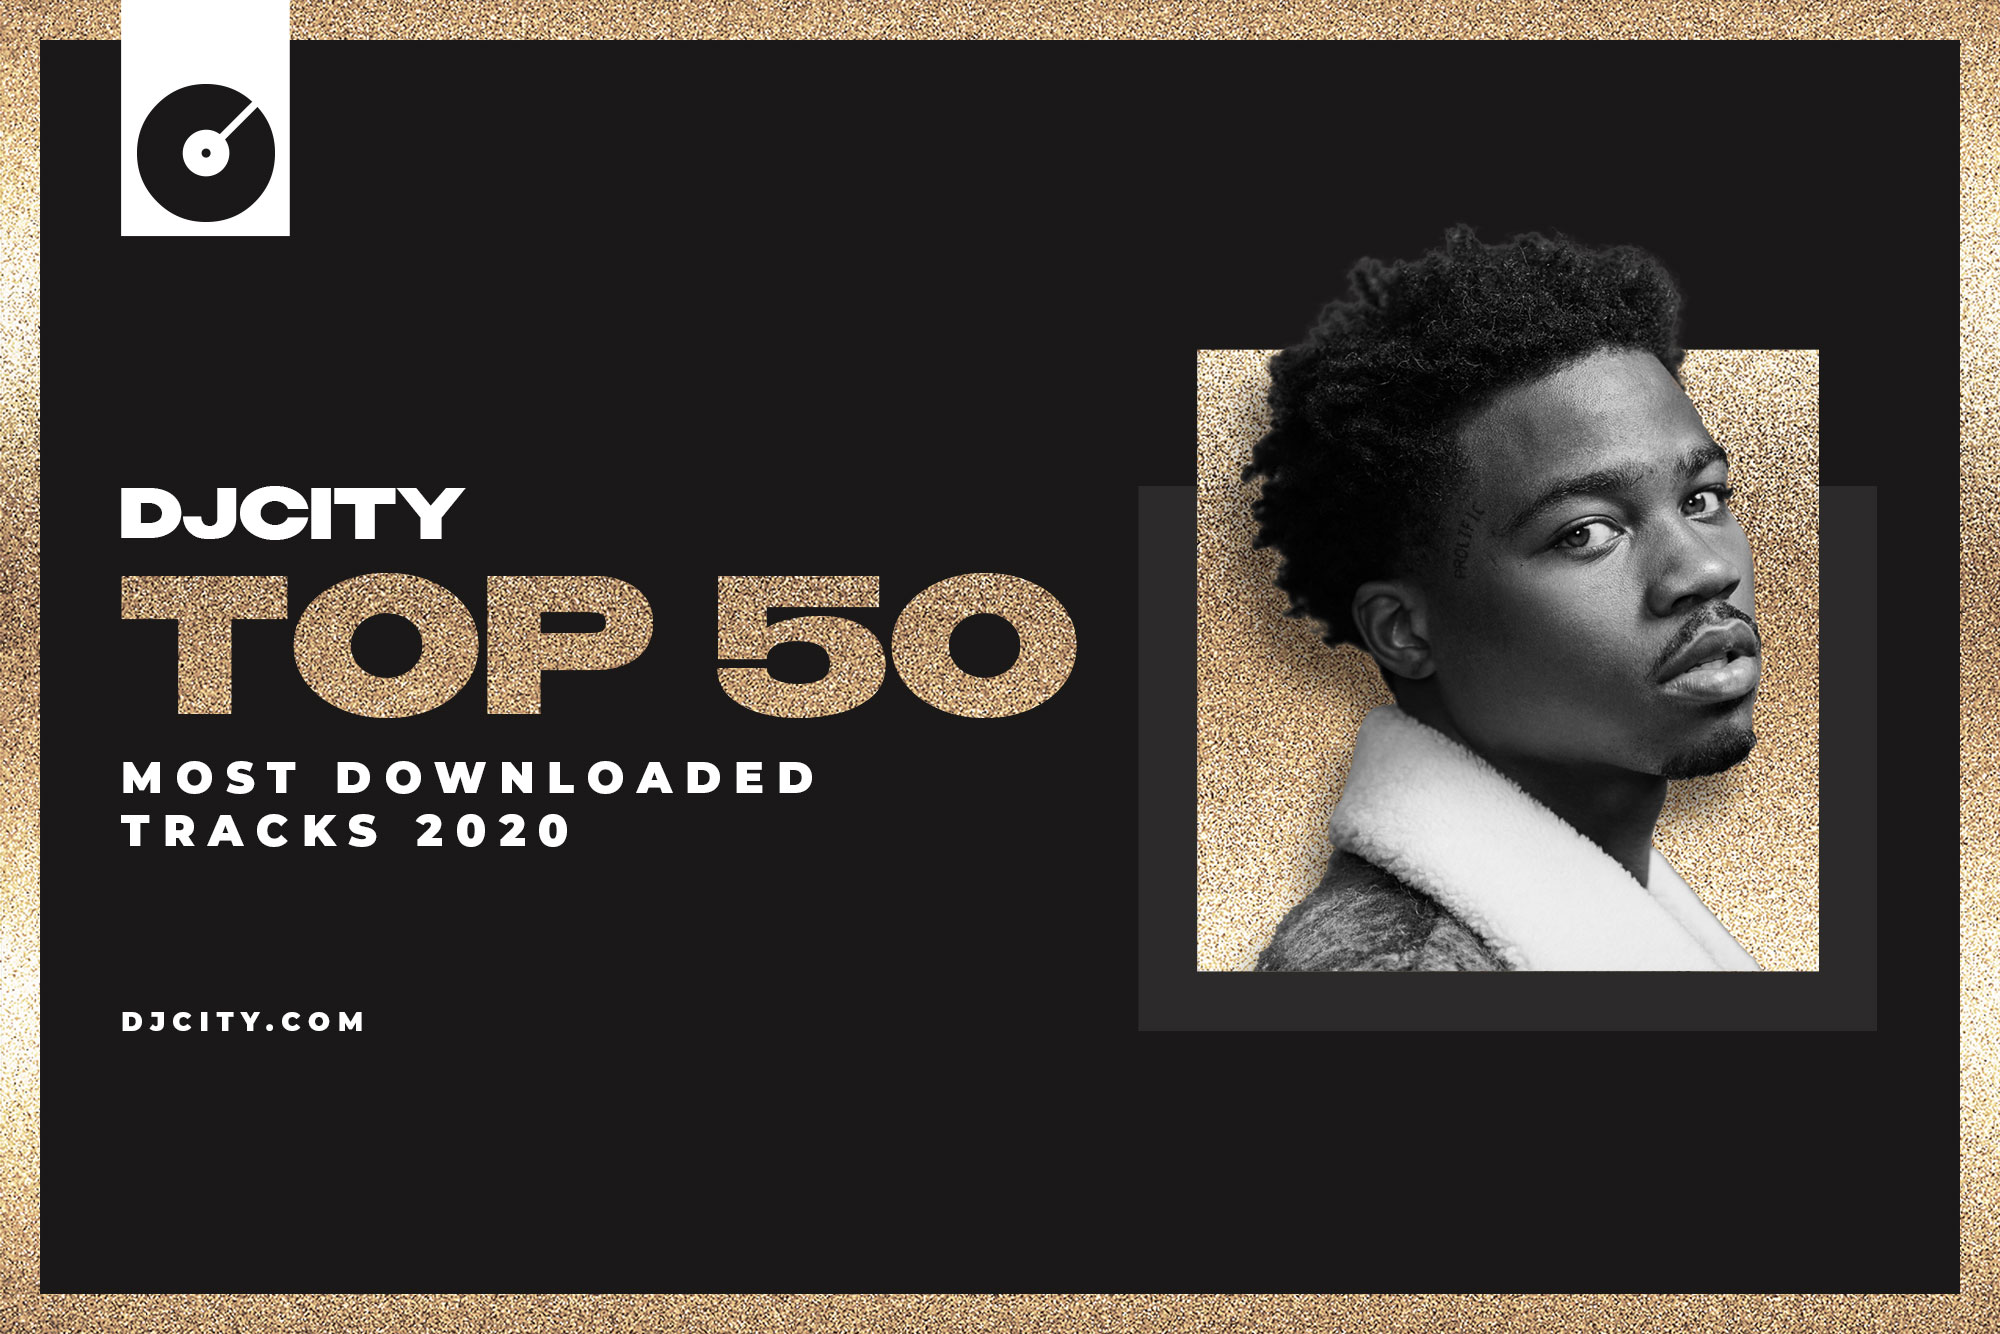 DJcity’s 50 Most Downloaded Tracks of 2020